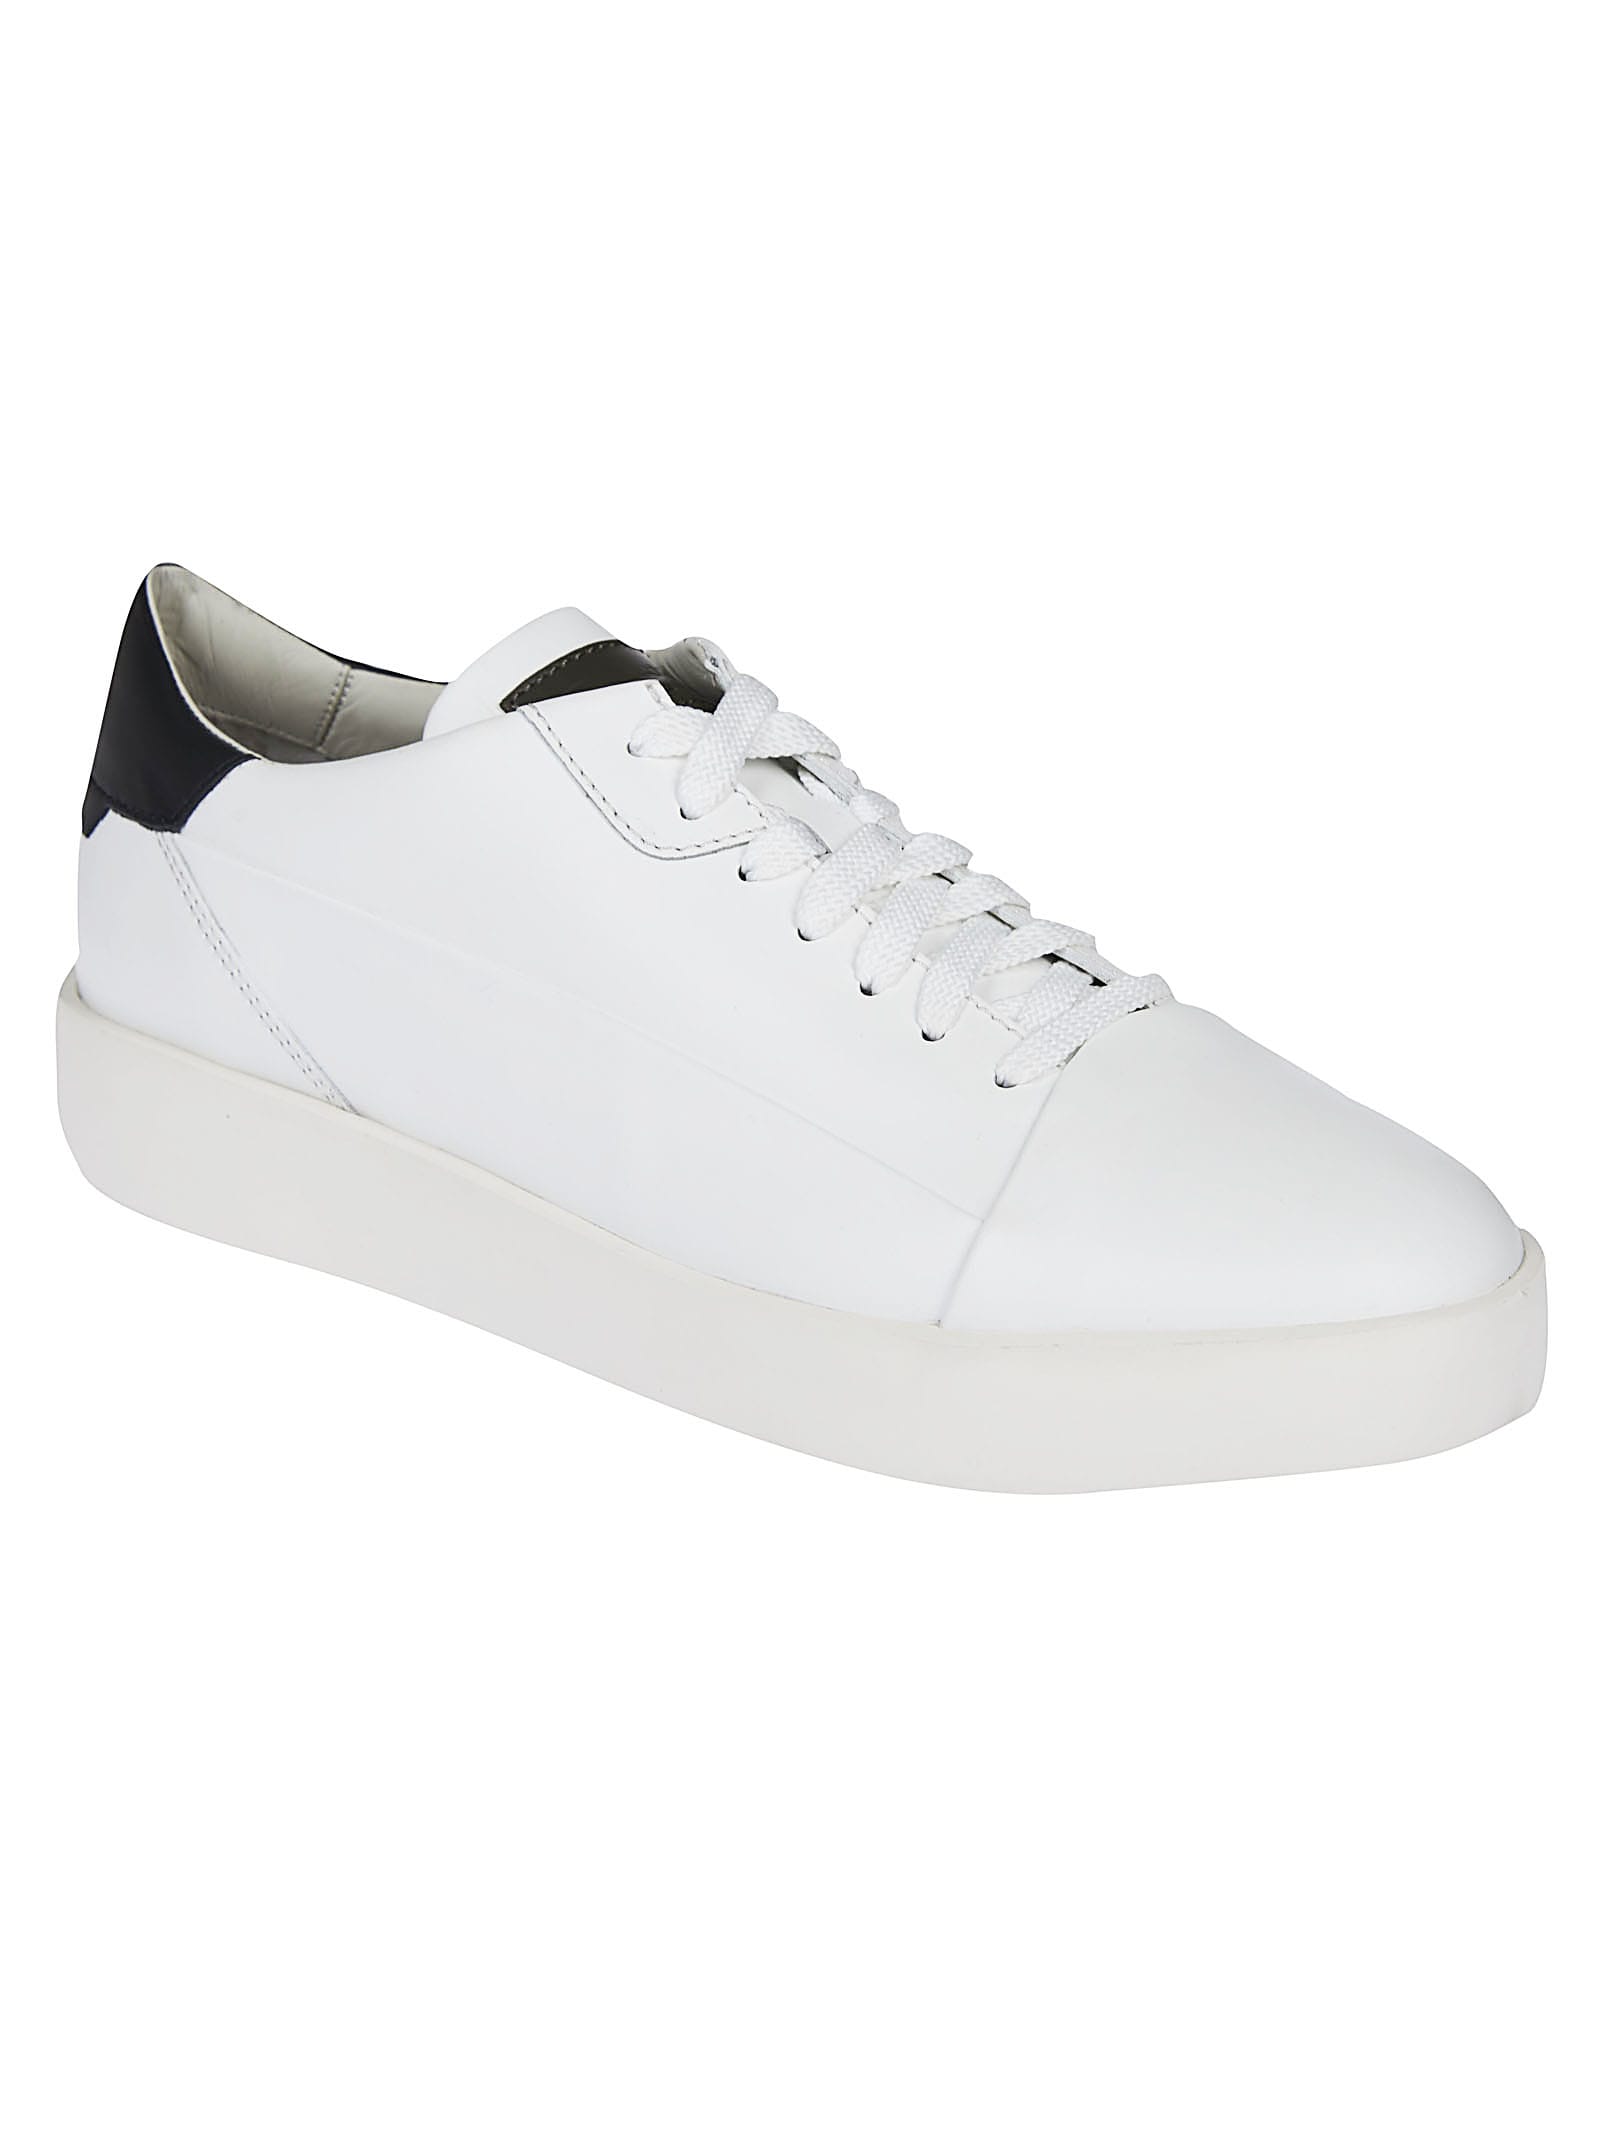 santoni sneakers white